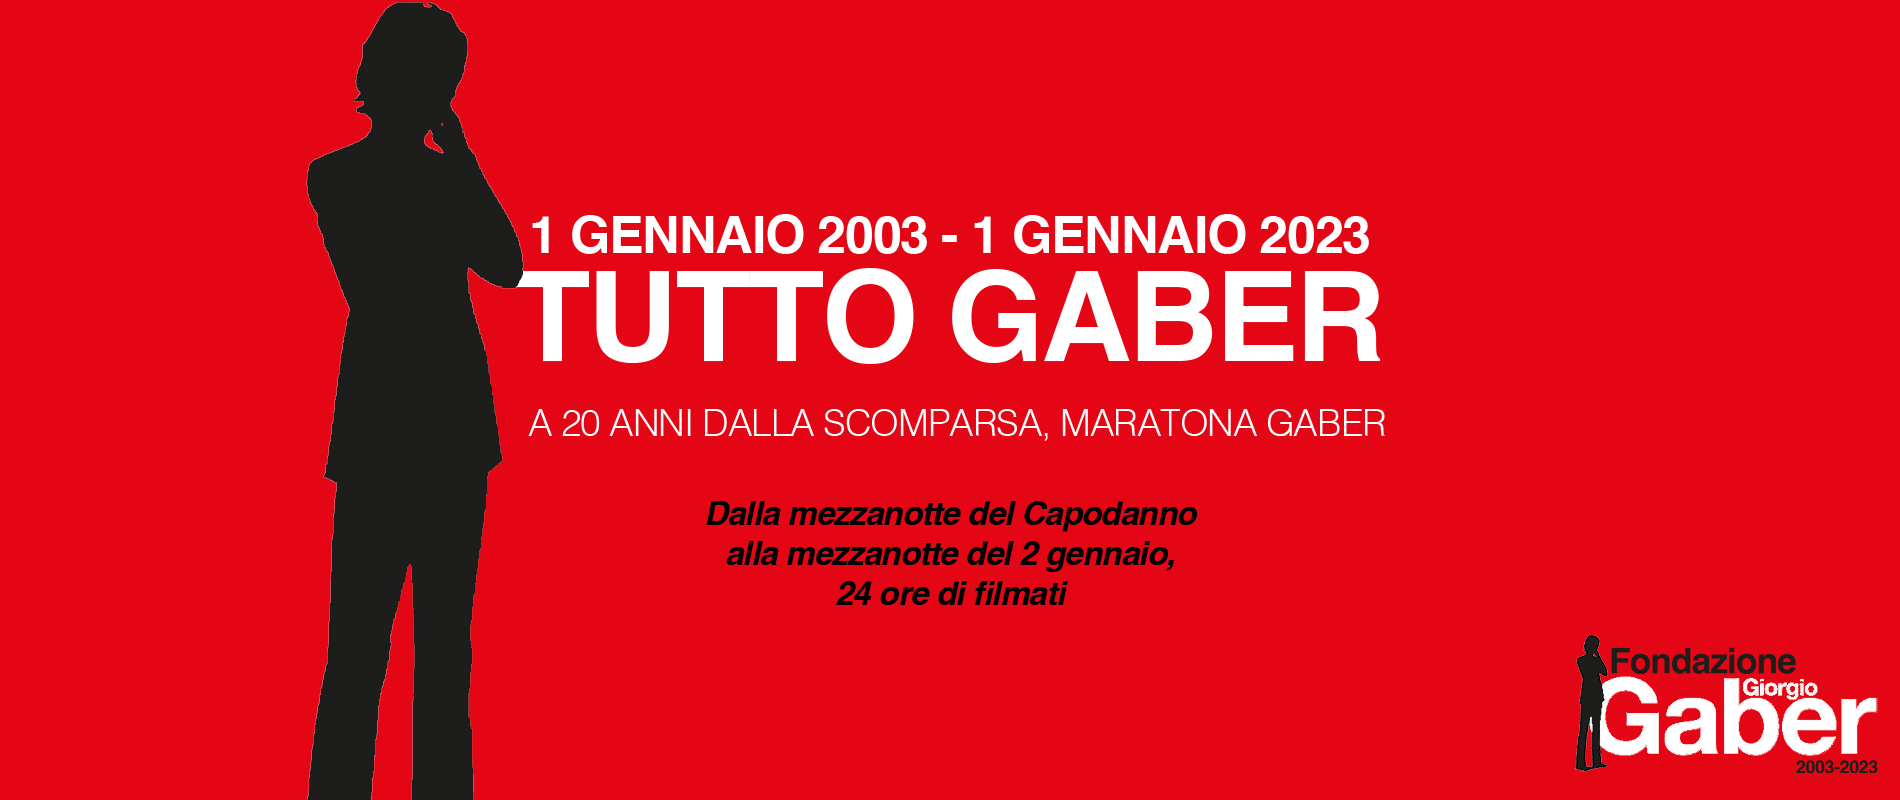 Giorgio Gaber maratona